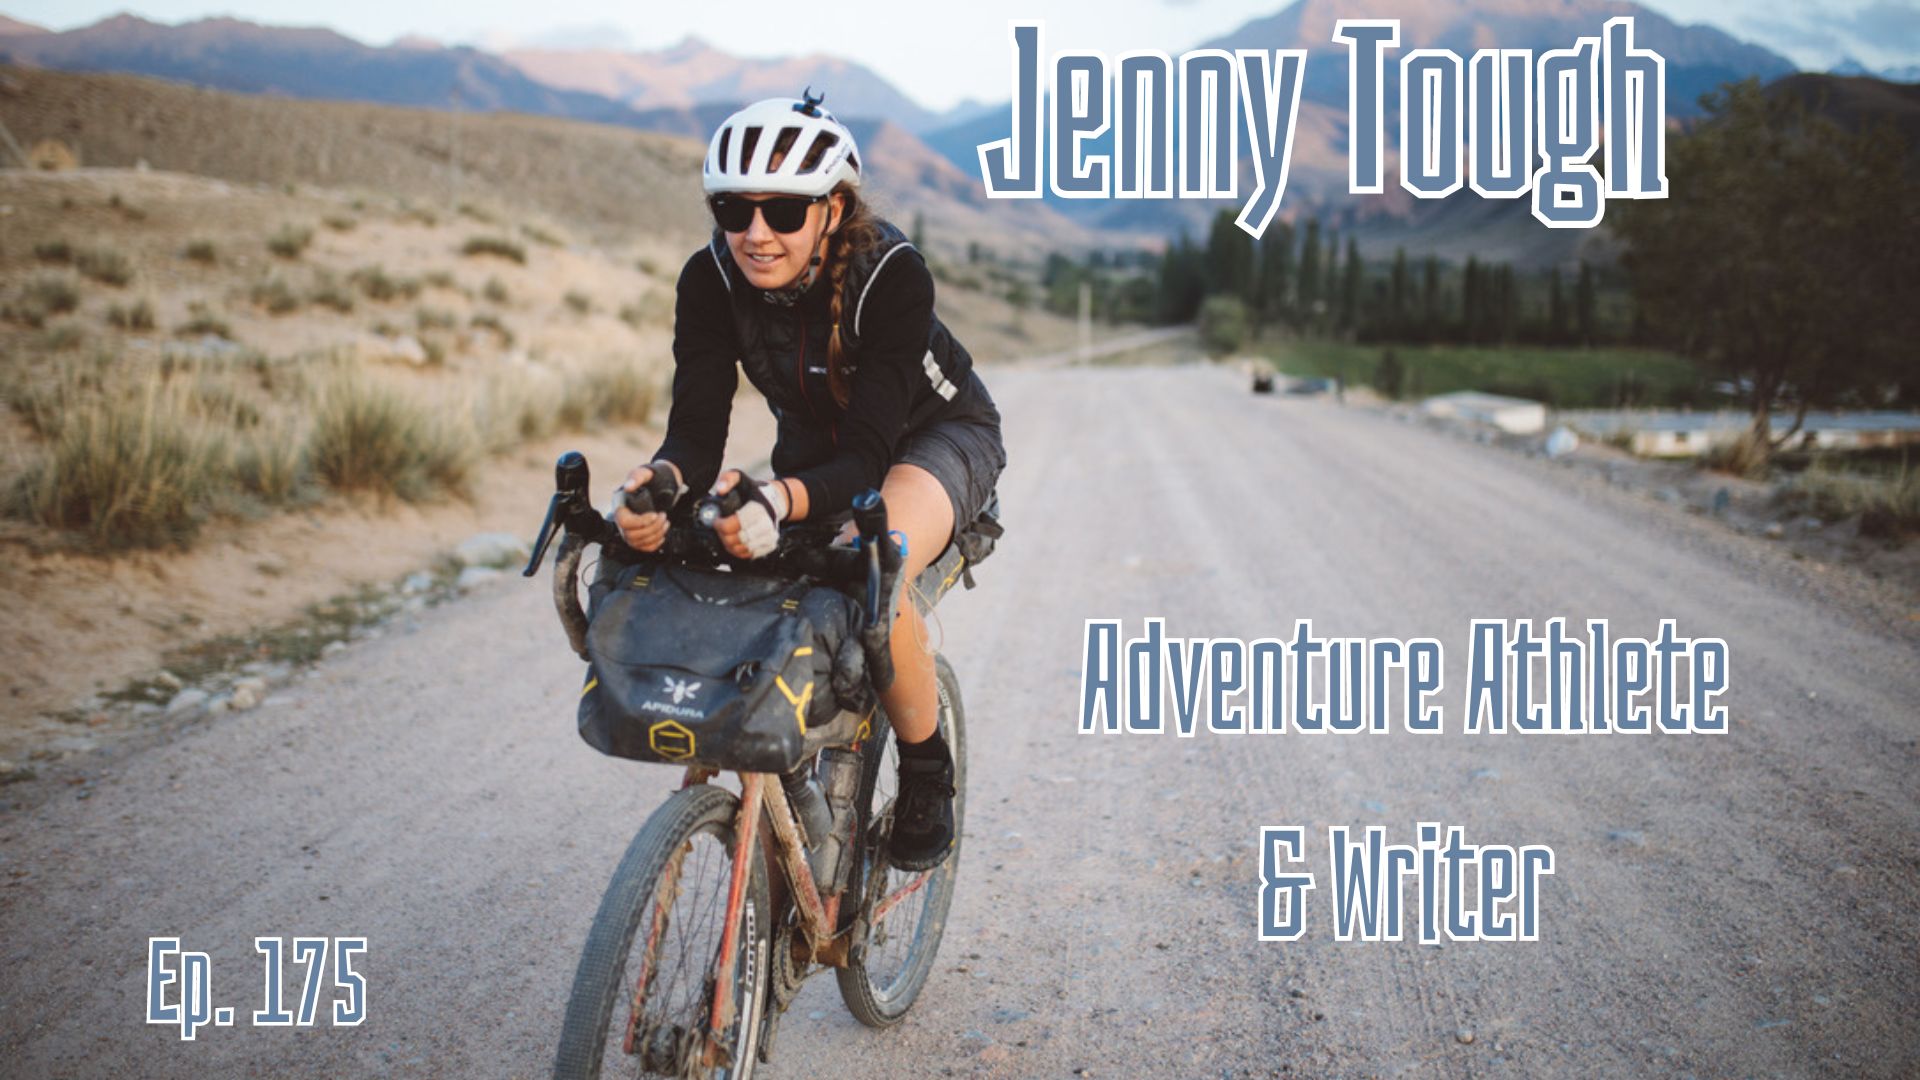 Ep. 175 ~ Jenny Tough, Adventure Athlete & Writer